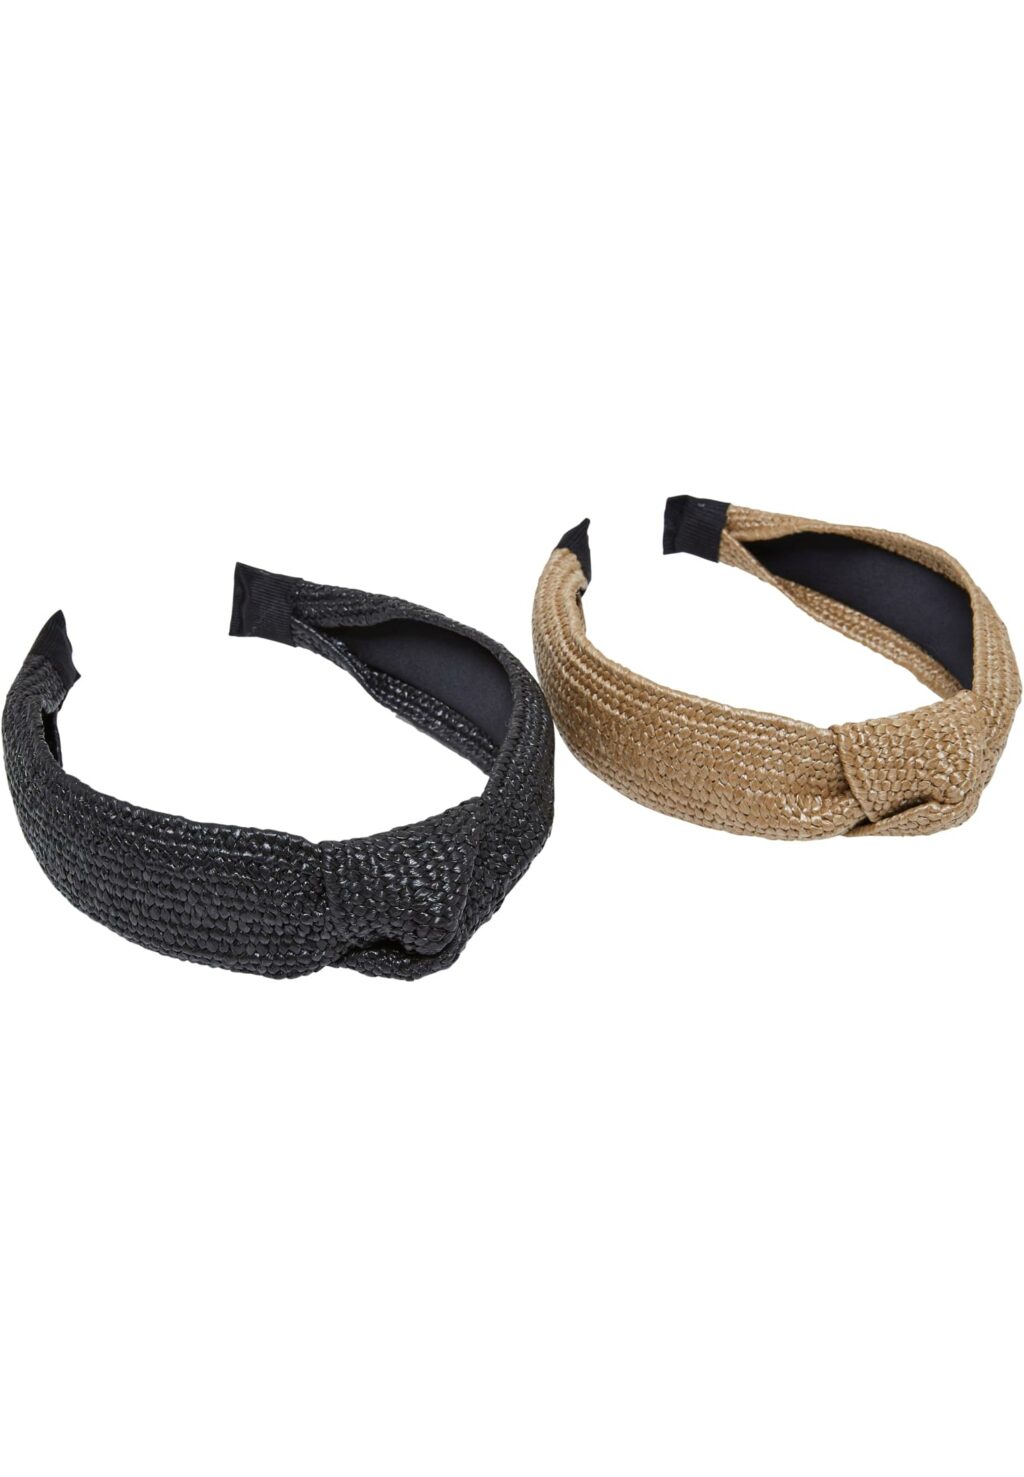 Braid Bast Headband 2-Pack black/beige one TB6441